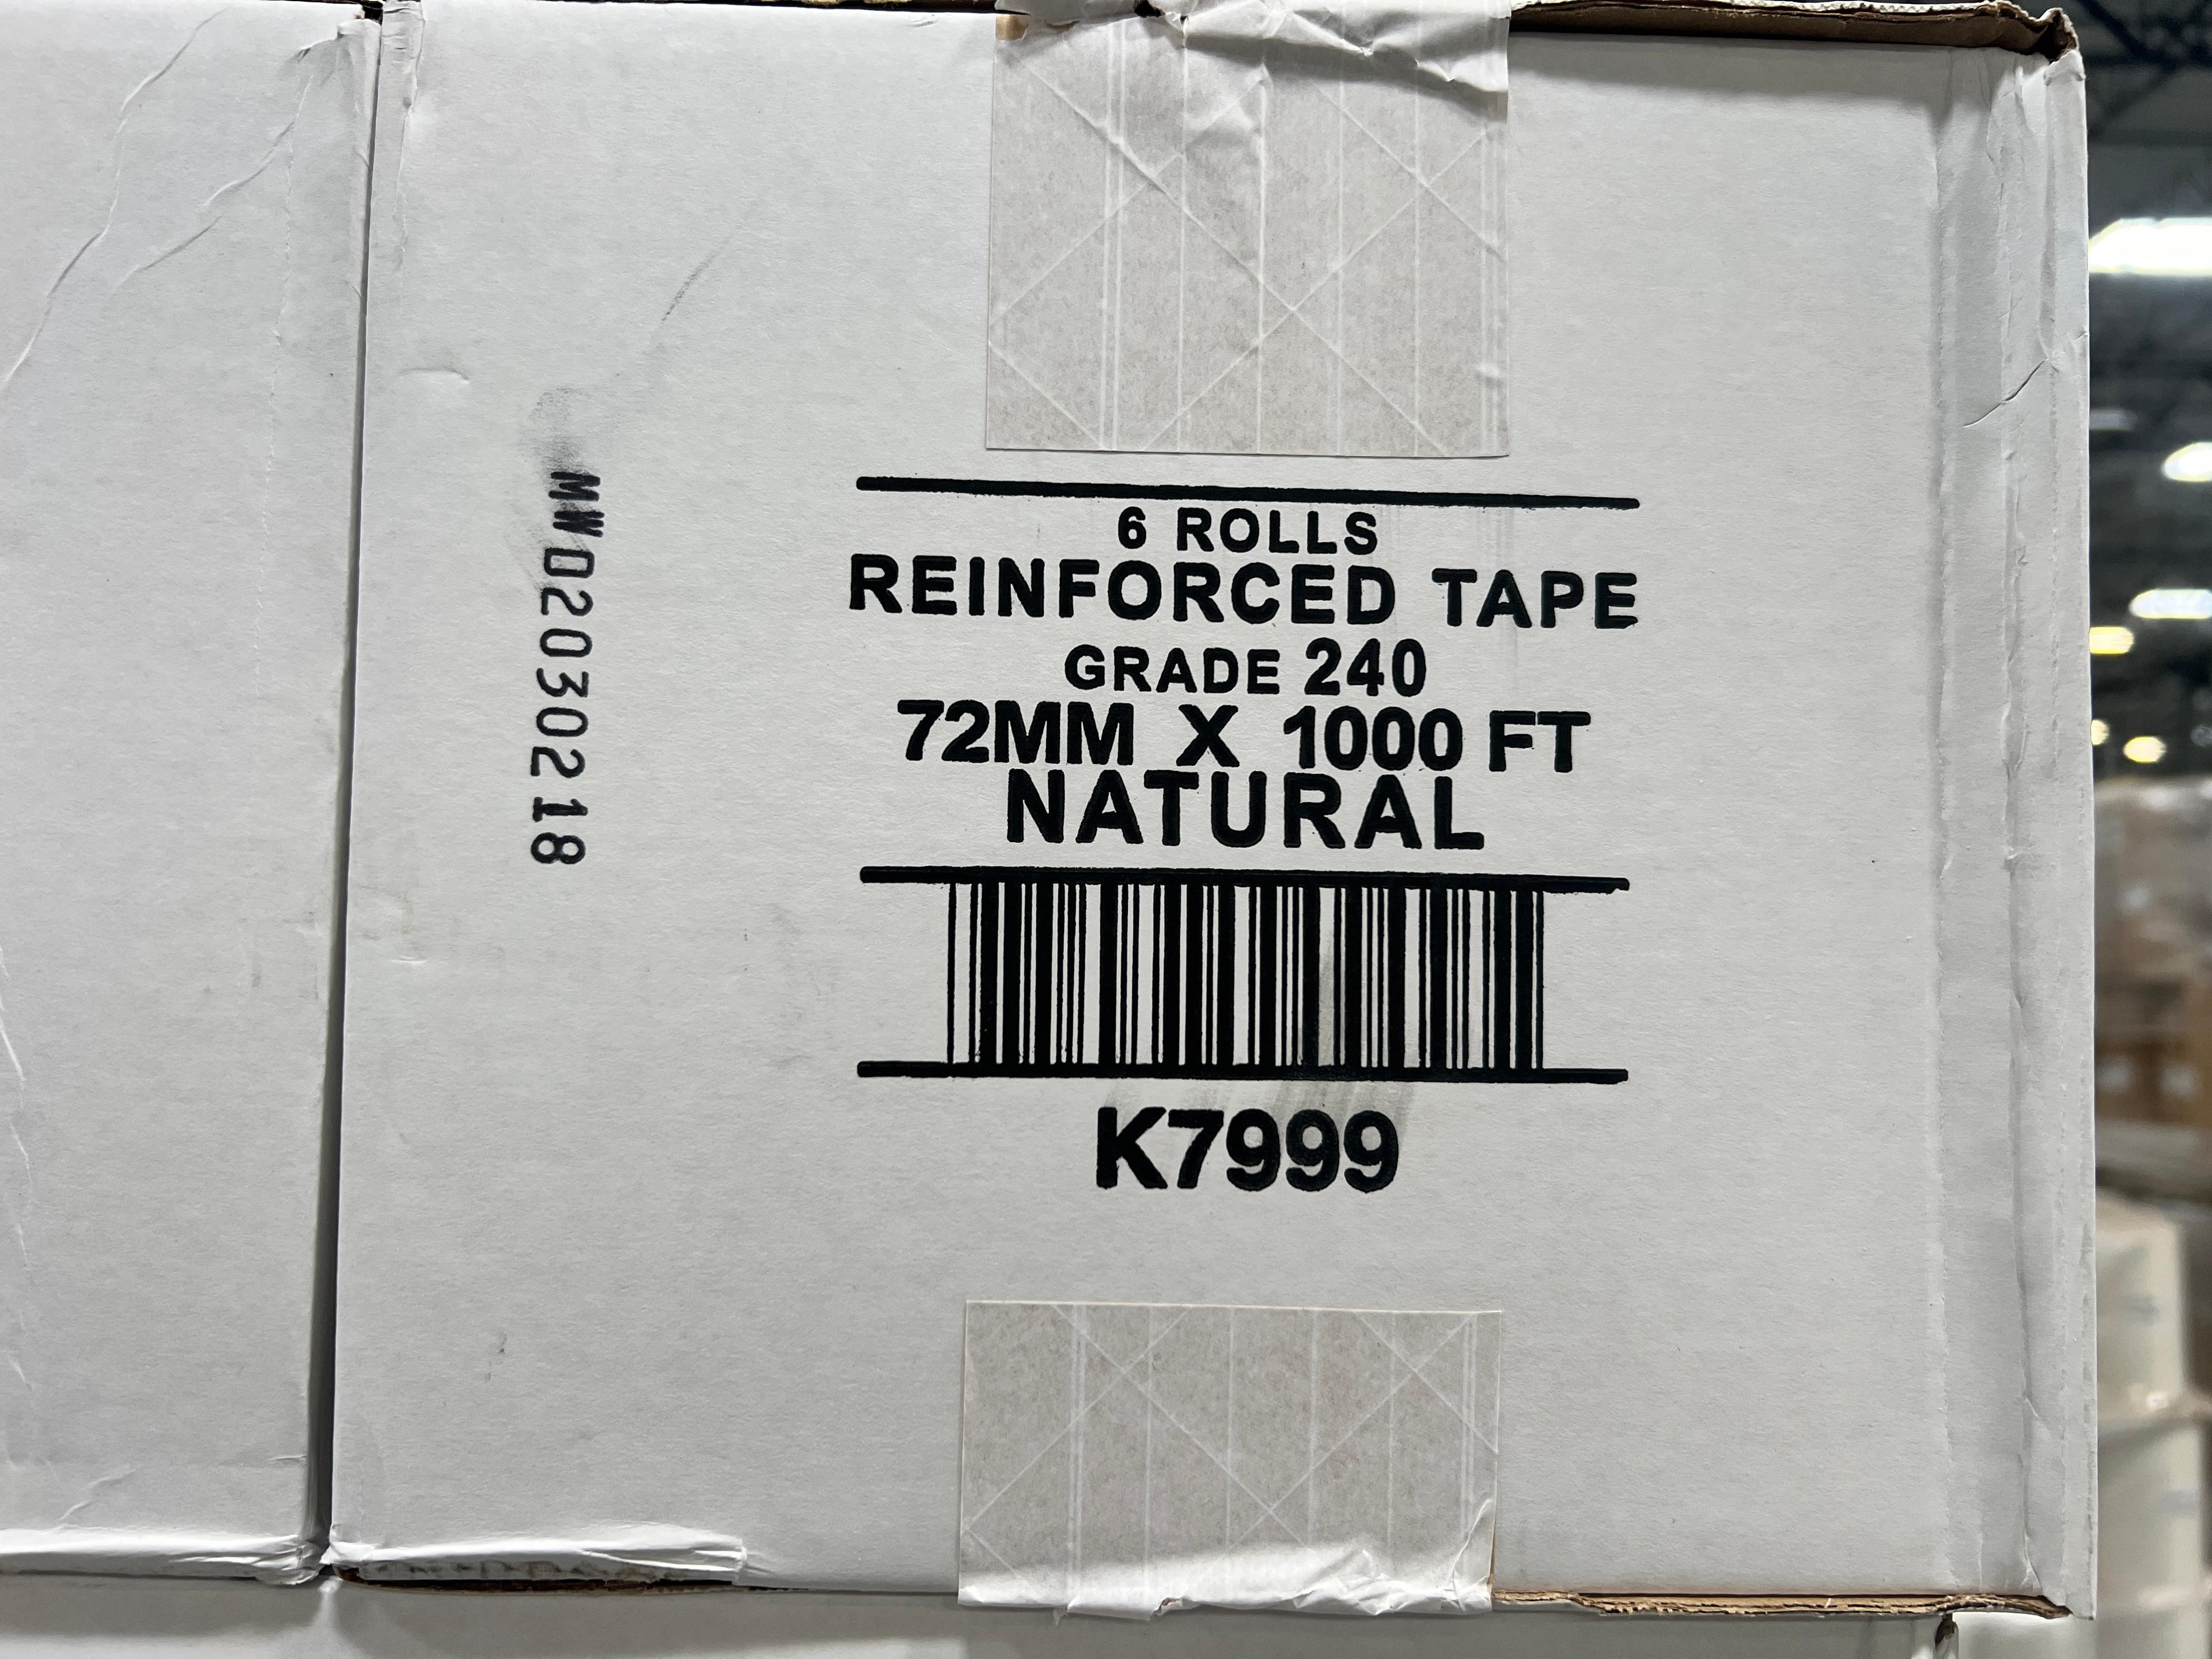 Reinforced Tape Grade 240 1000' Natural